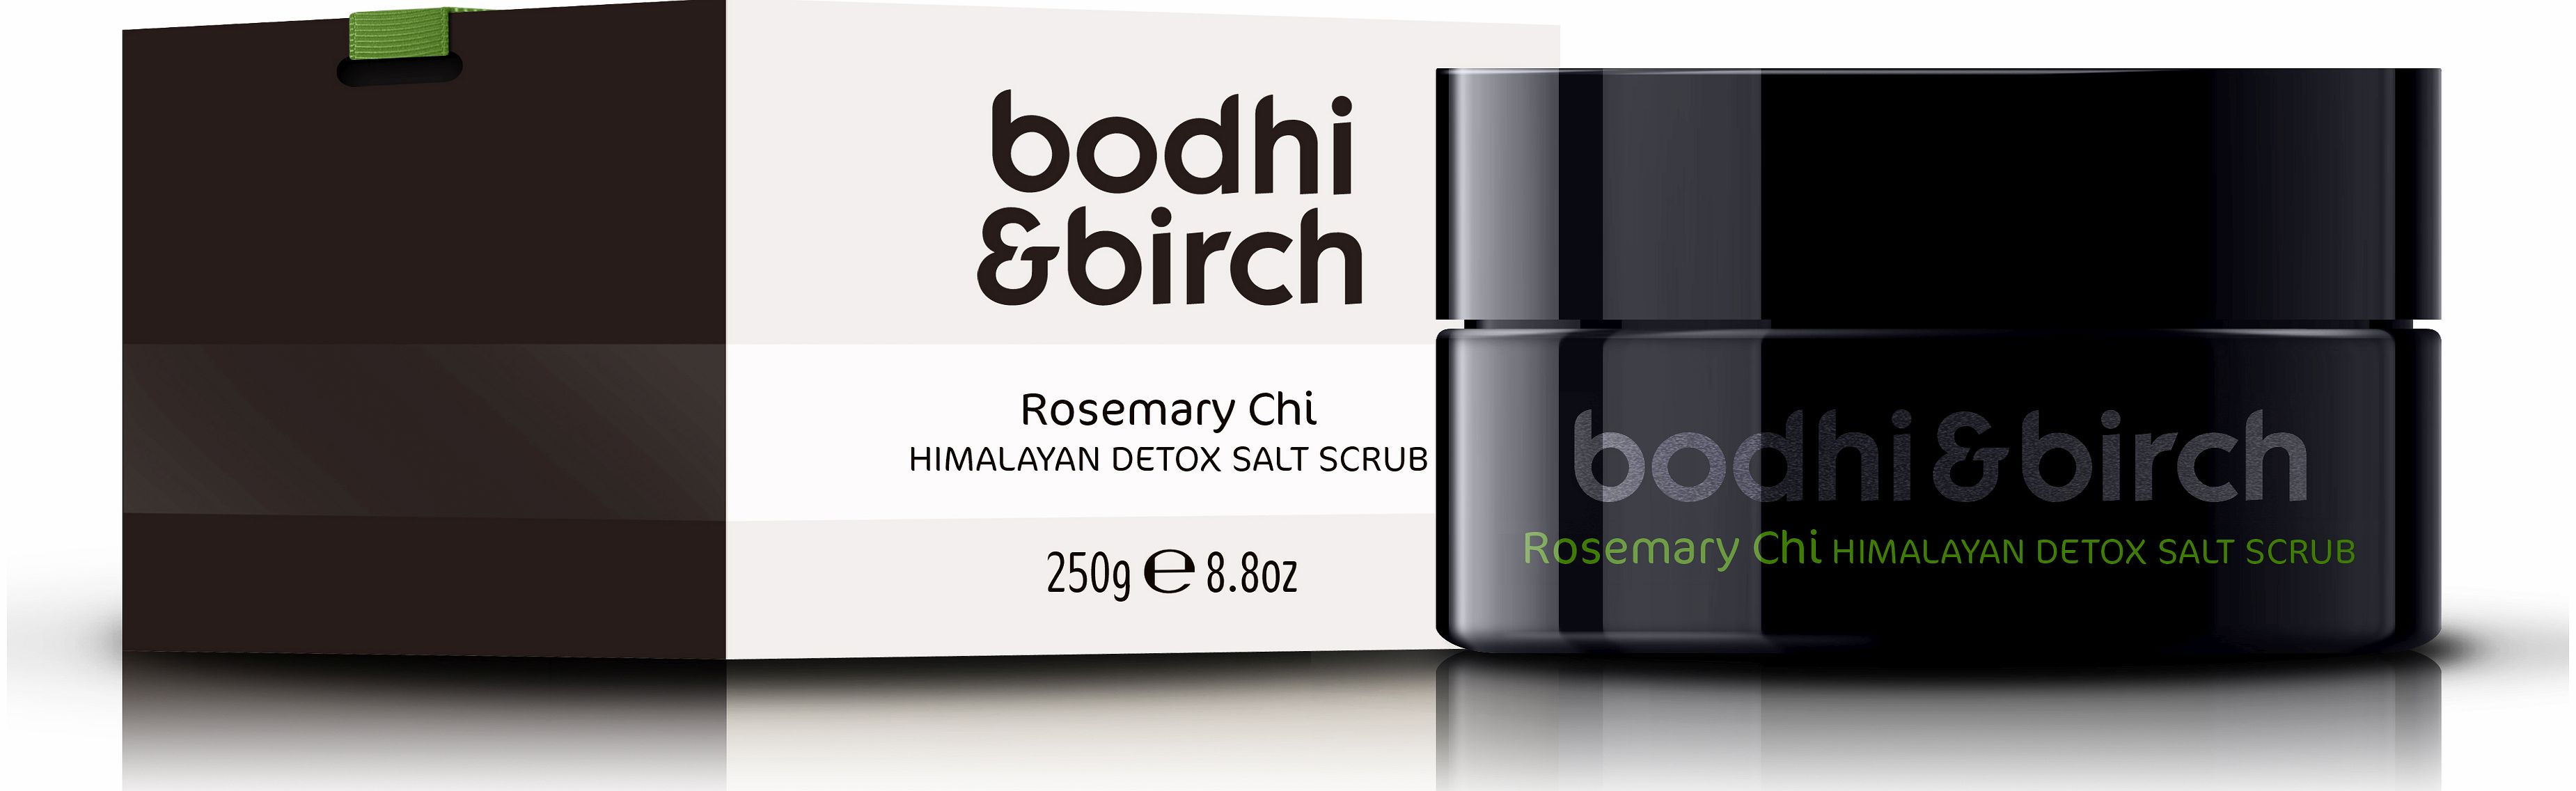 Rosemary Chi Himalayan Detox Salt